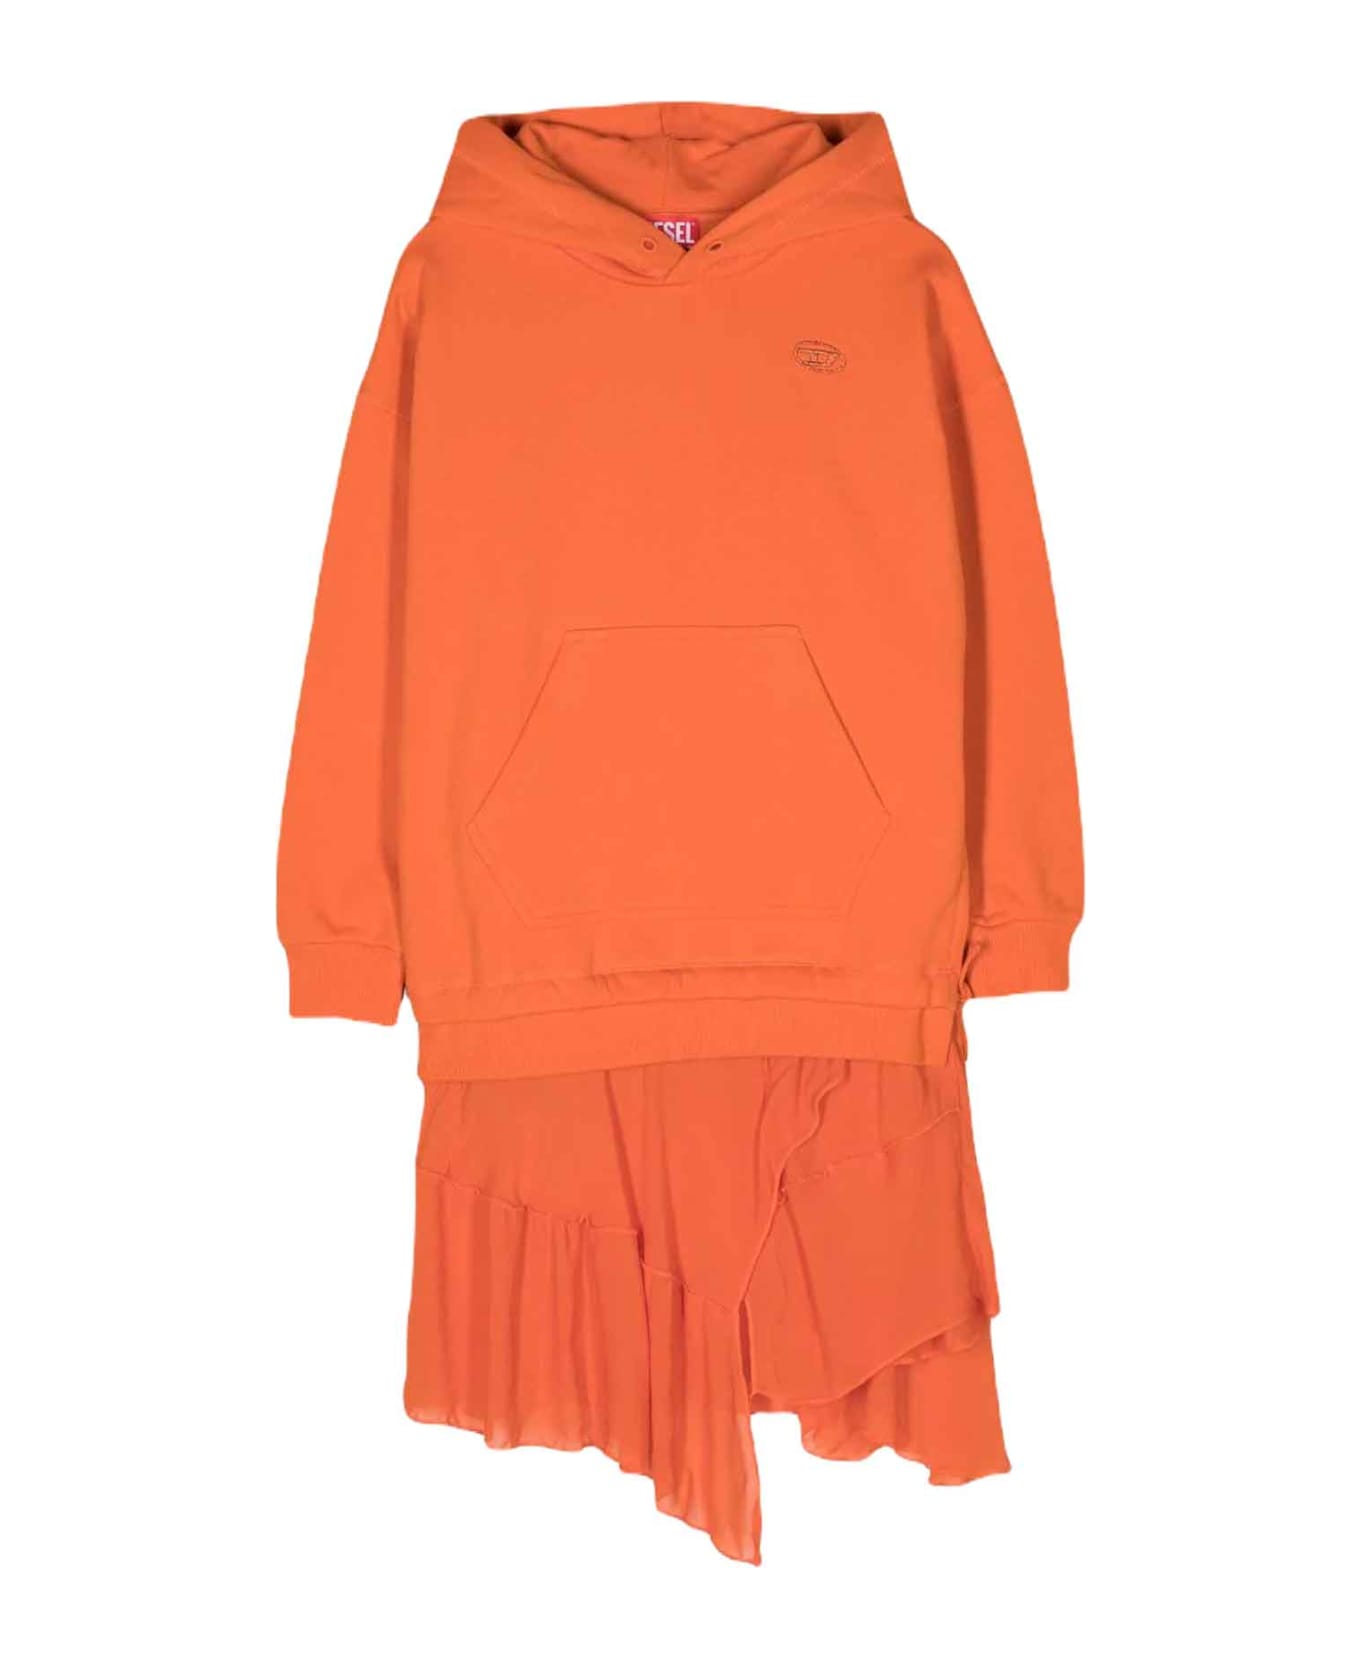 Diesel Orange Dress Girl - Arancione